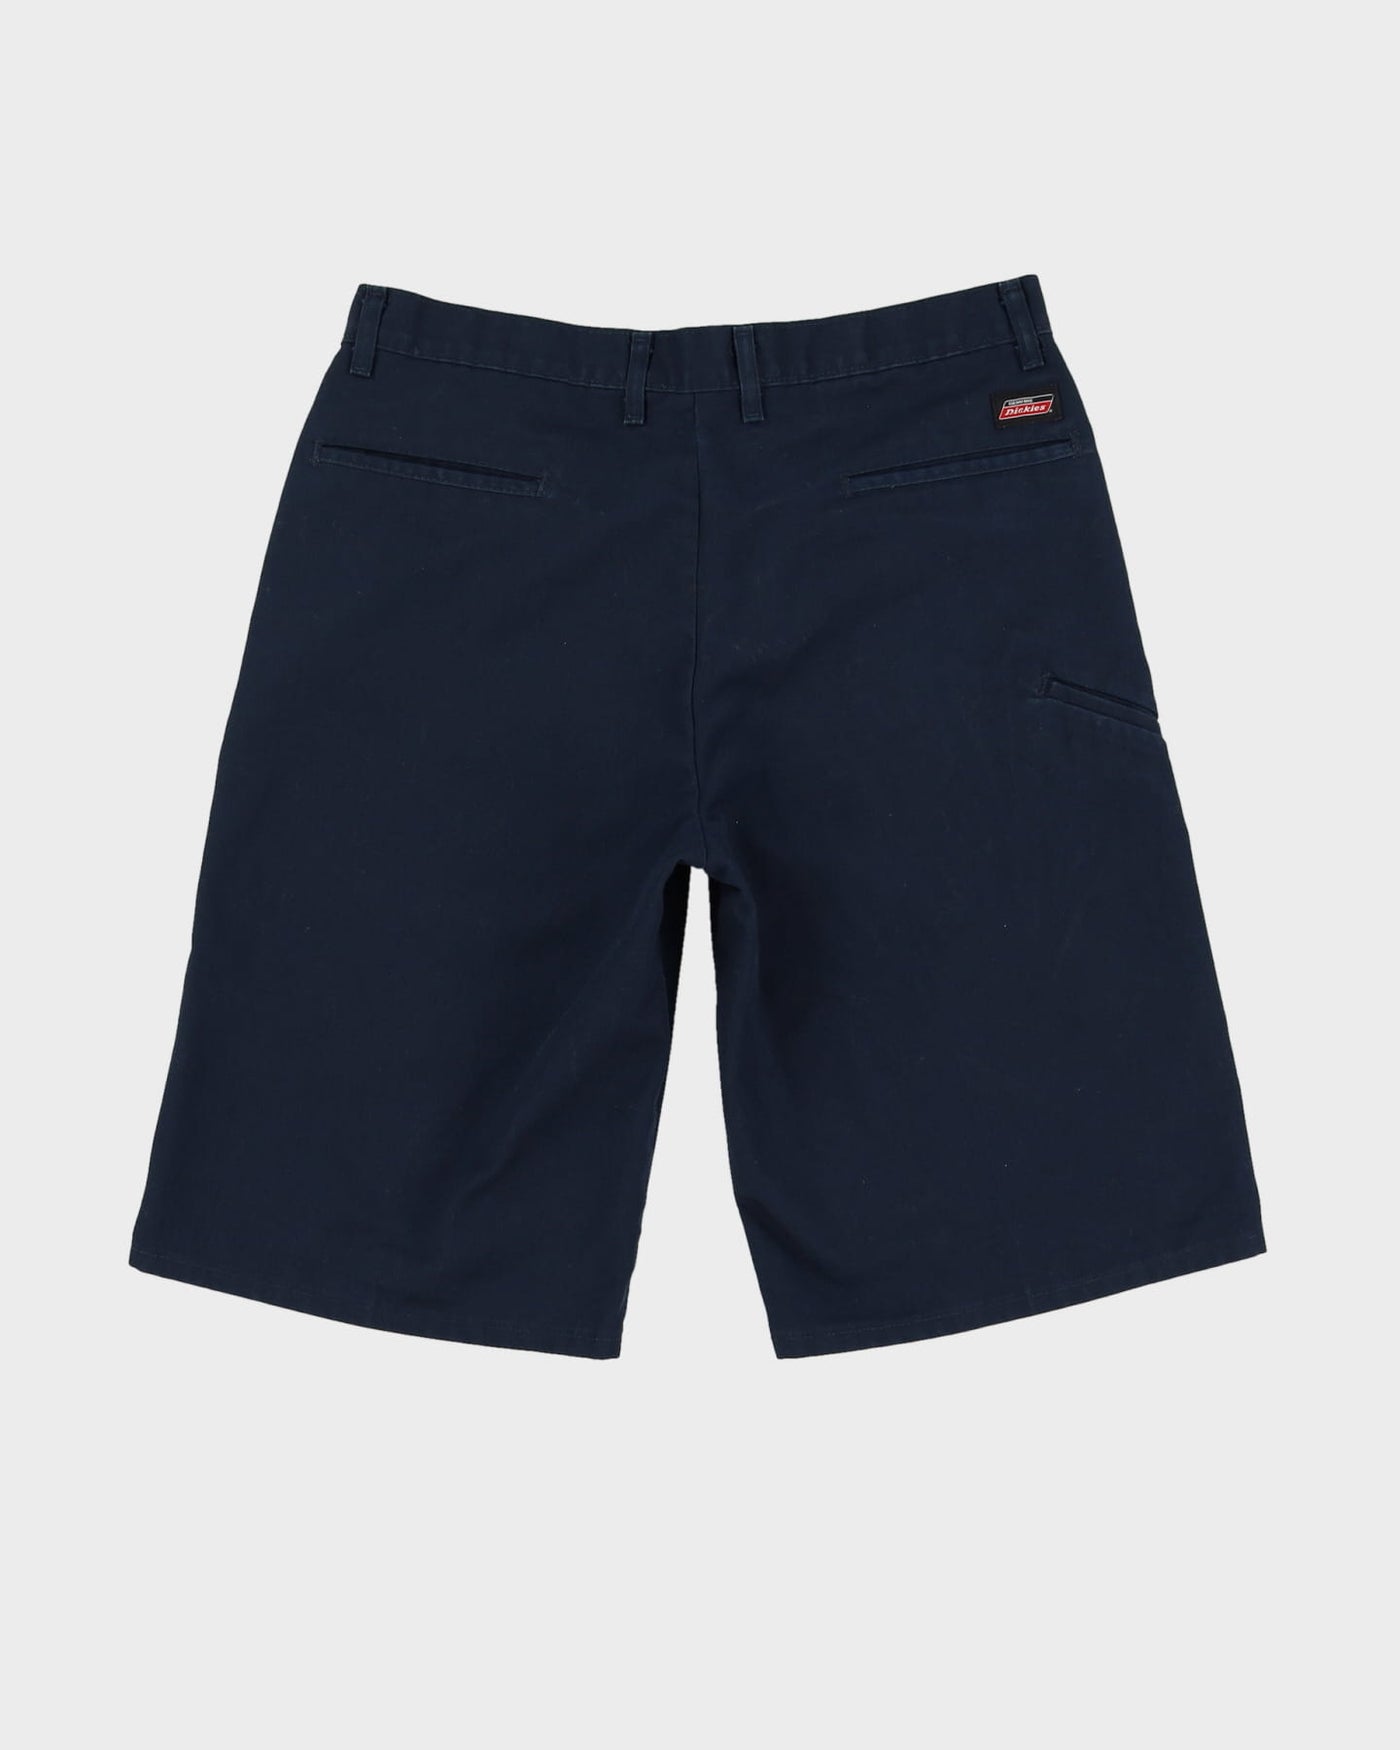 Dickies Navy Workwear Shorts - W34